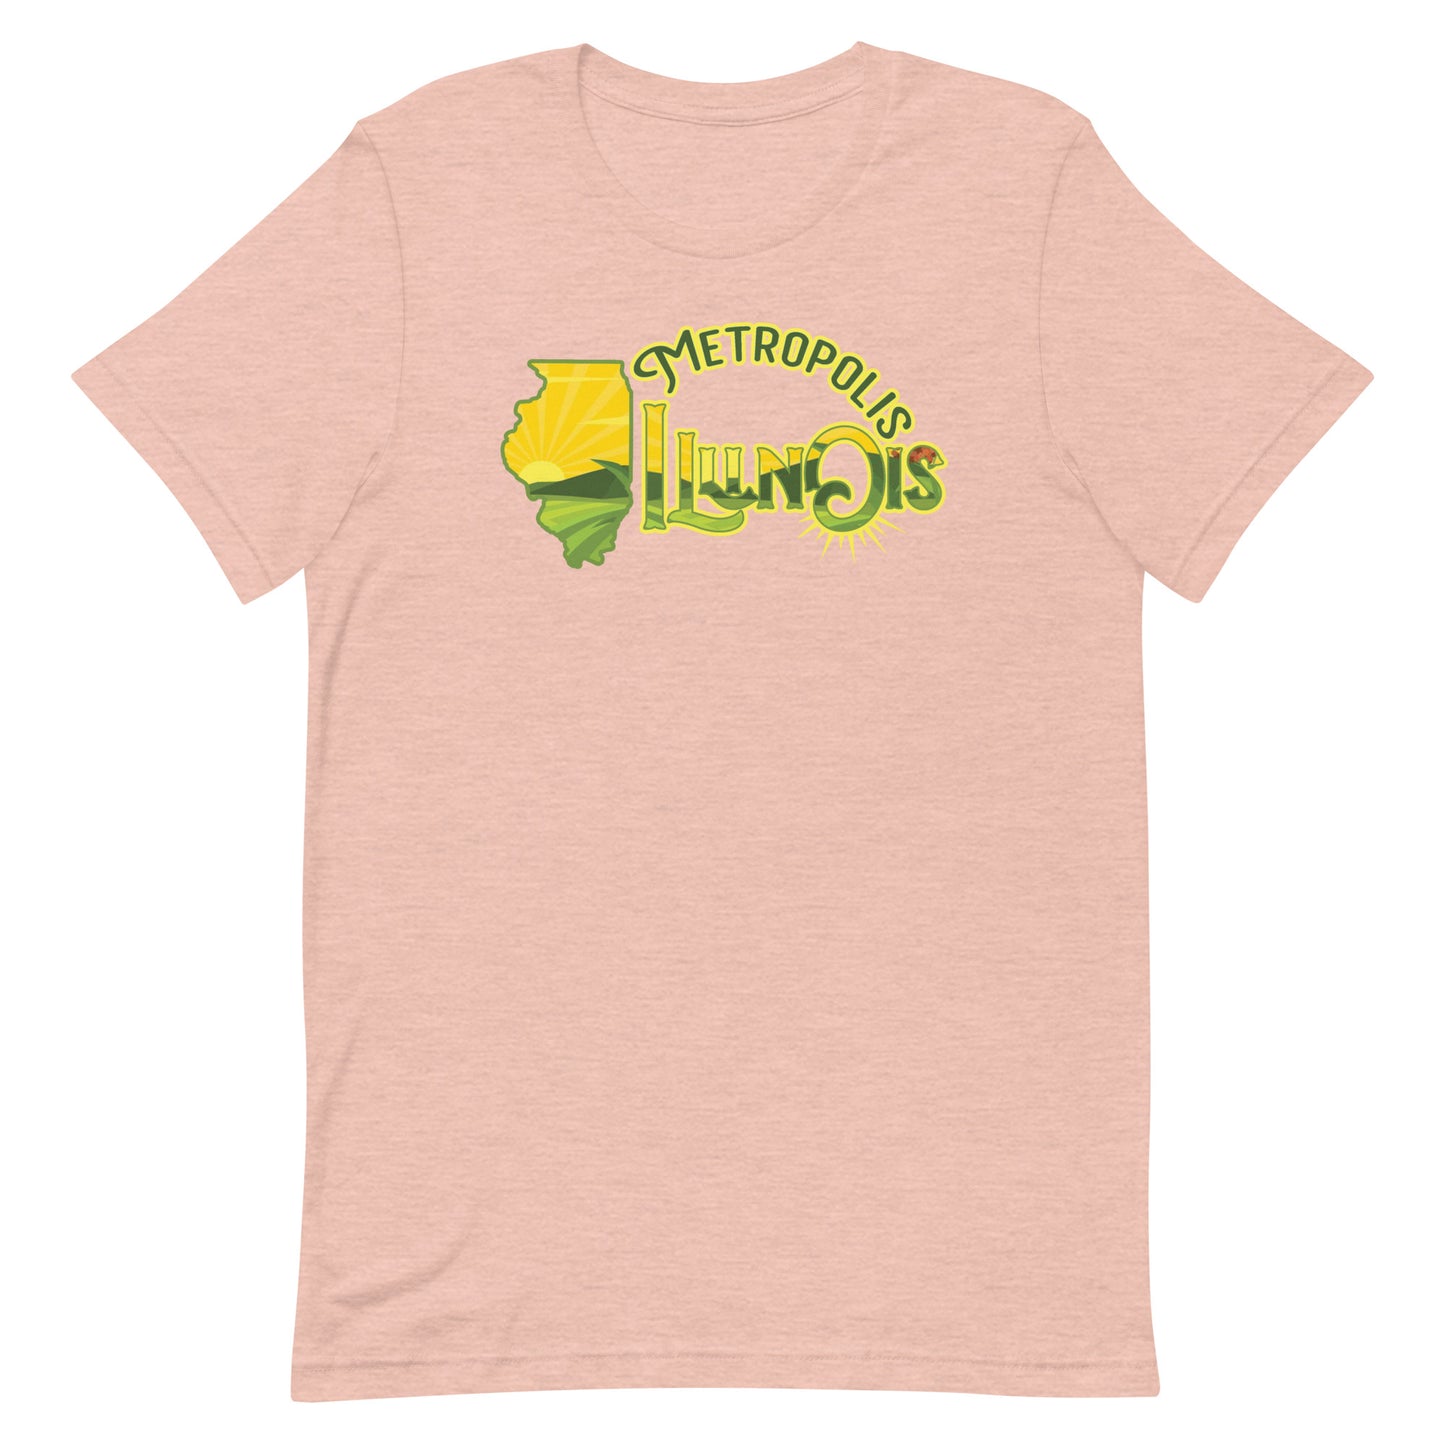 Metropolis Illinois Fields Unisex Adult Short Sleeve Shirt